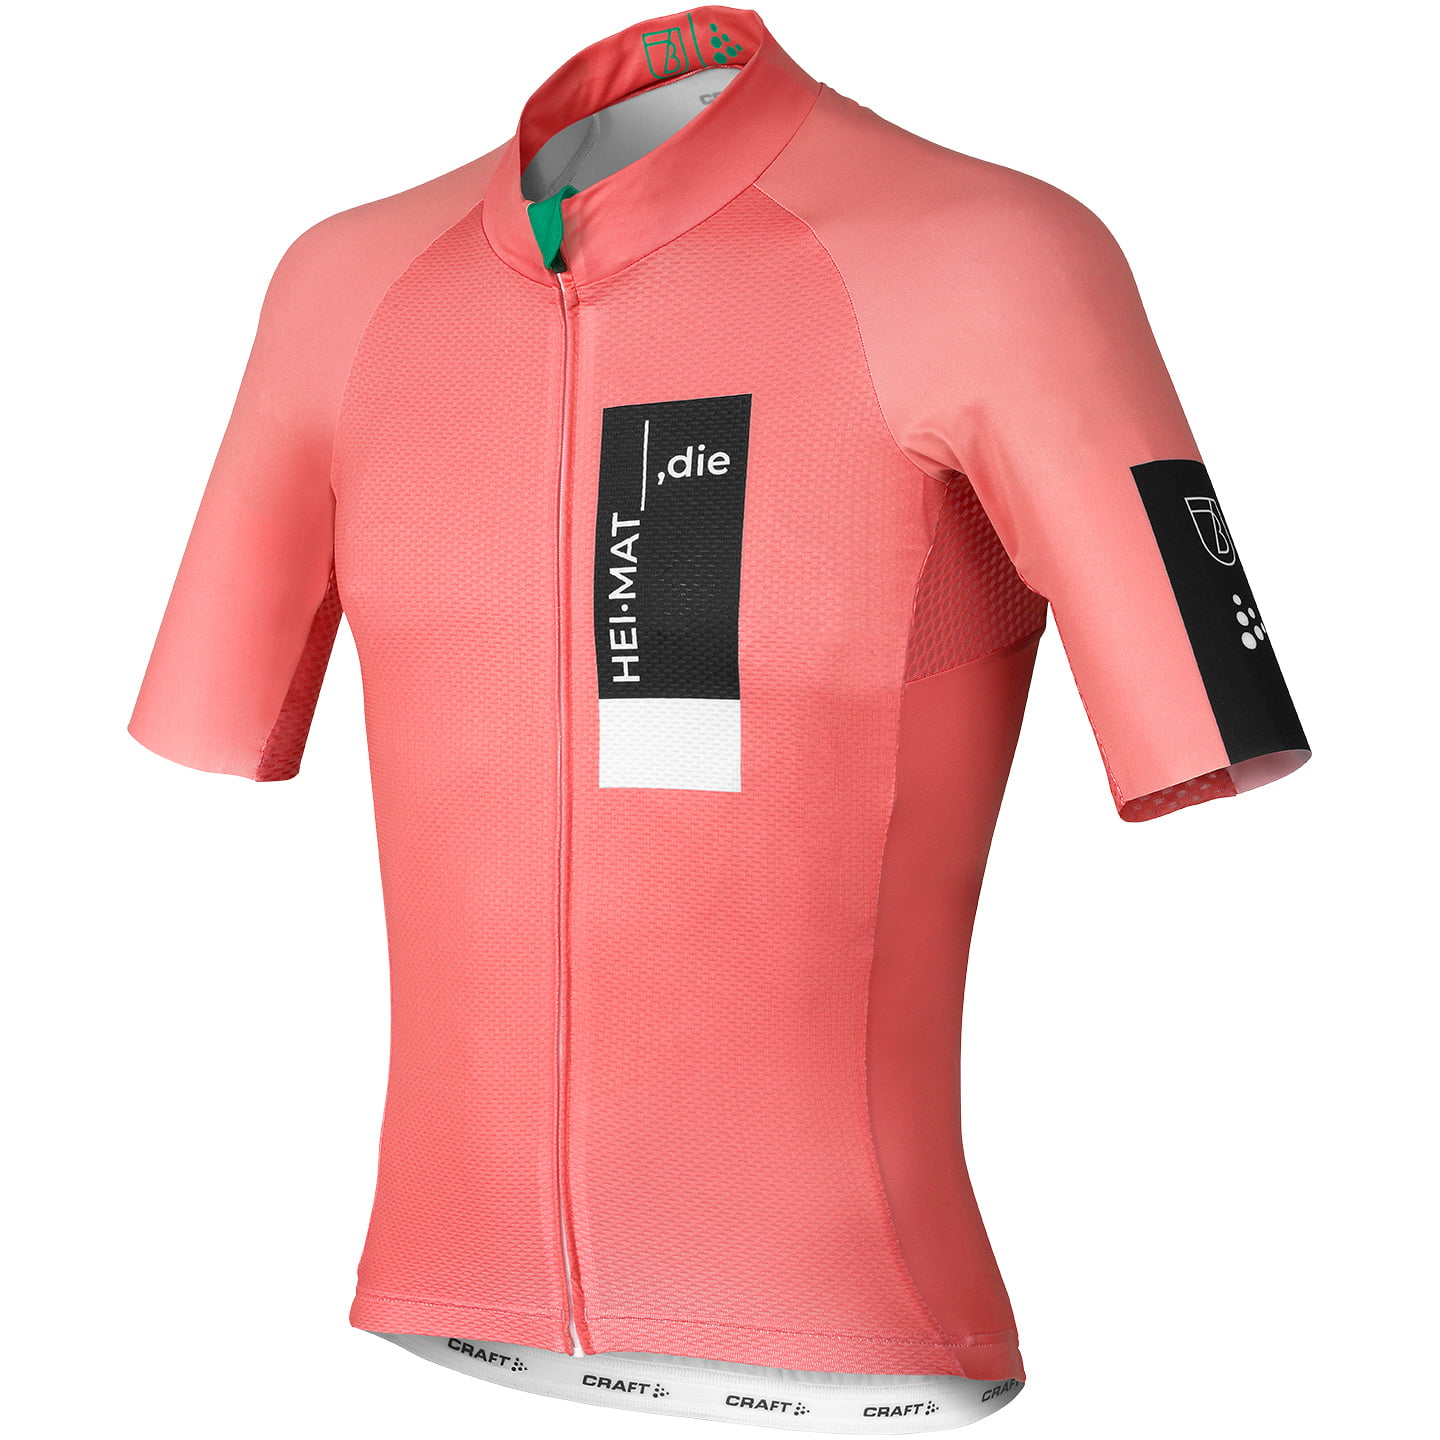 CRAFT von Brokk "Heimat, die" Aero Short Sleeve Jersey Short Sleeve Jersey, for men, size M, Cycling jersey, Cycling clothing